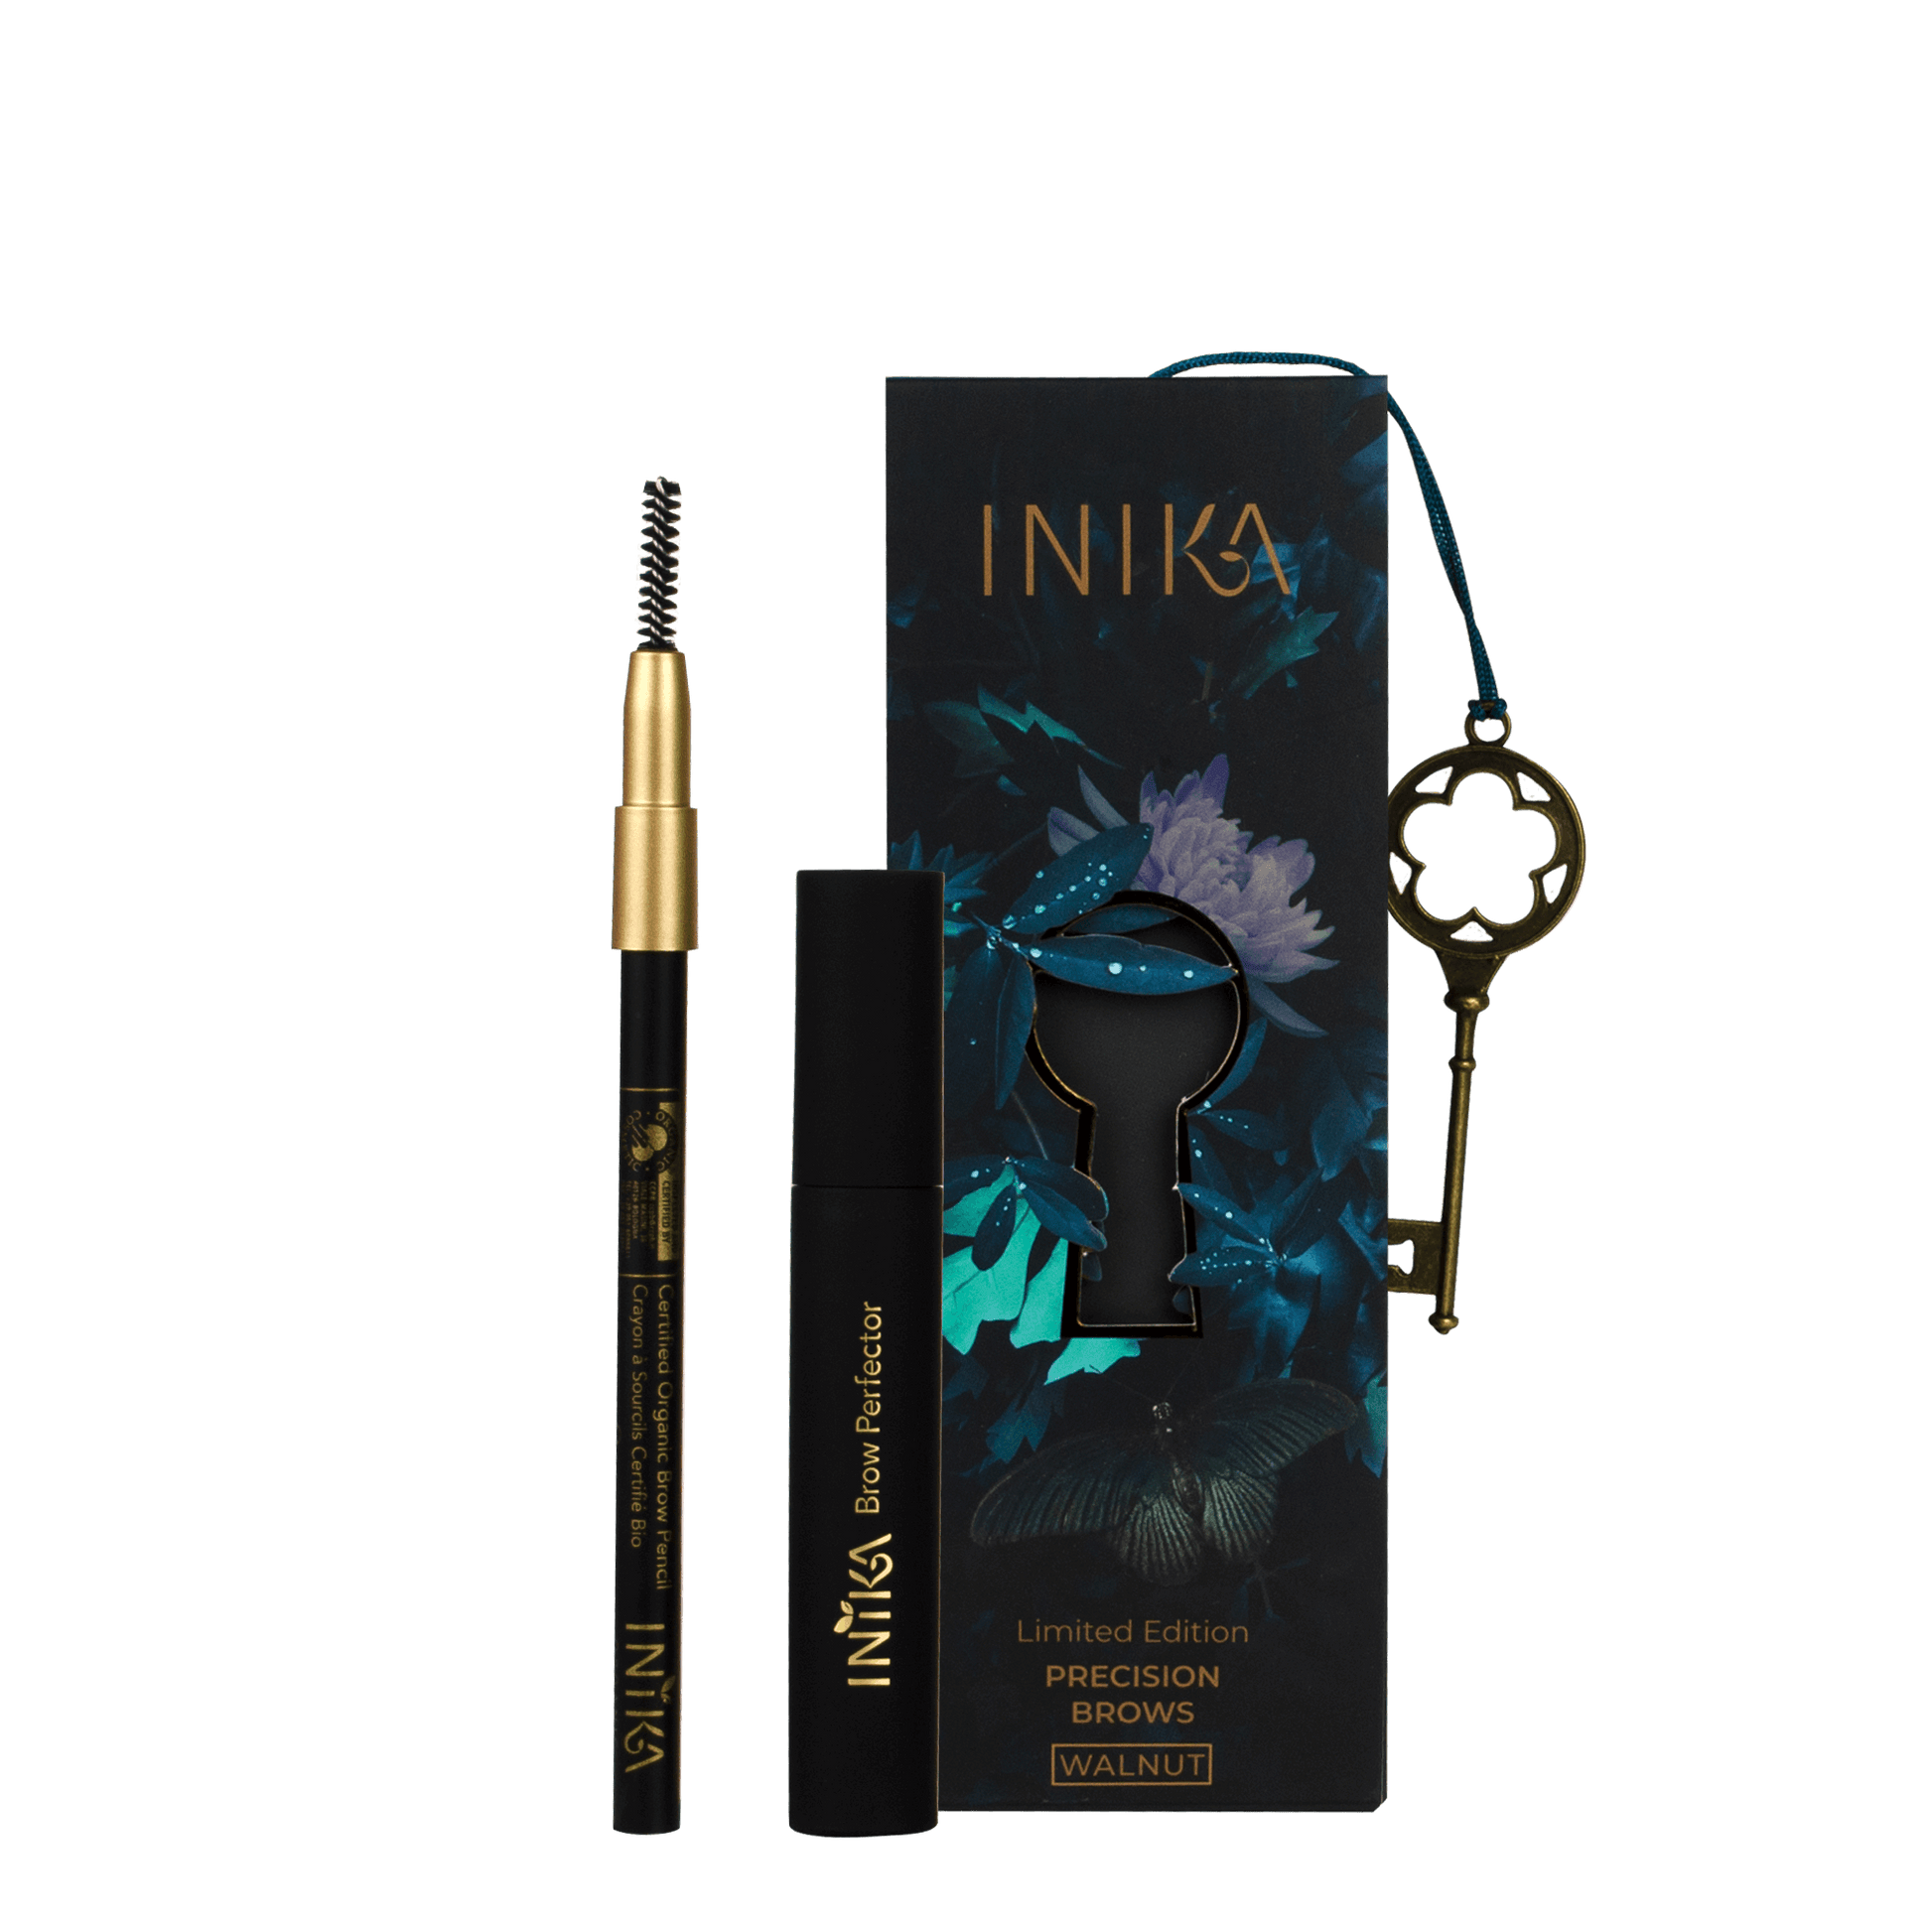 Limited Edition Precision Brows (Walnut) INIKA Organic